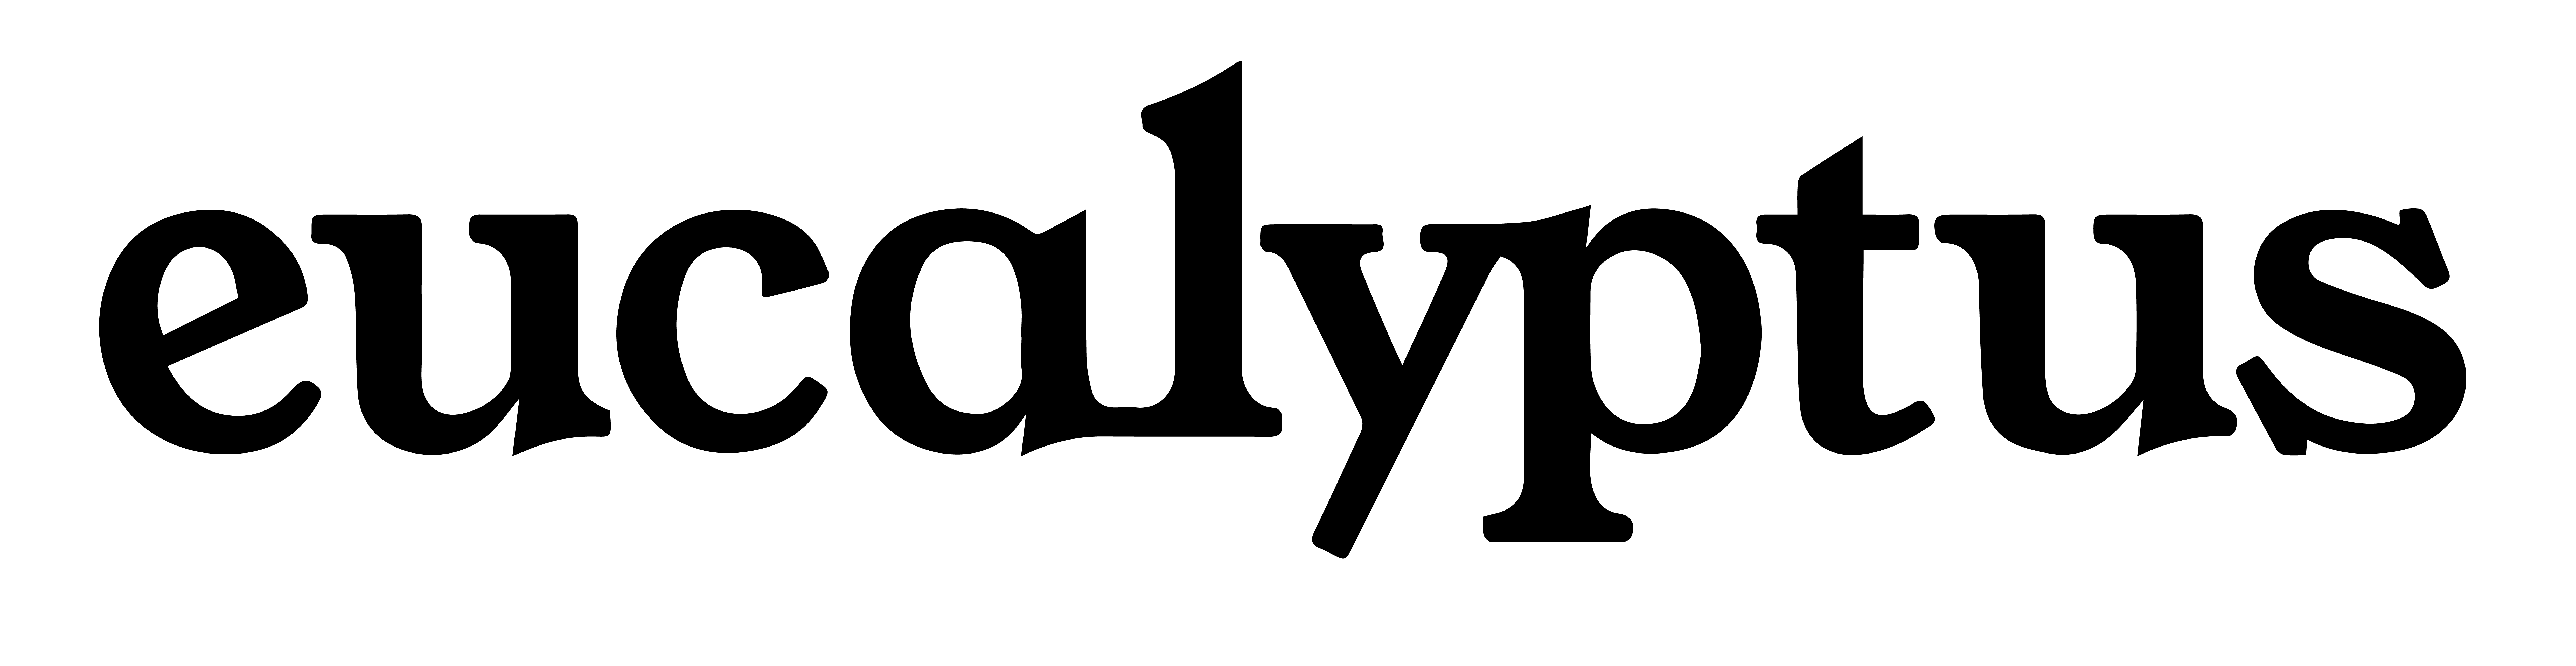 eucalyptus-logo-black-01